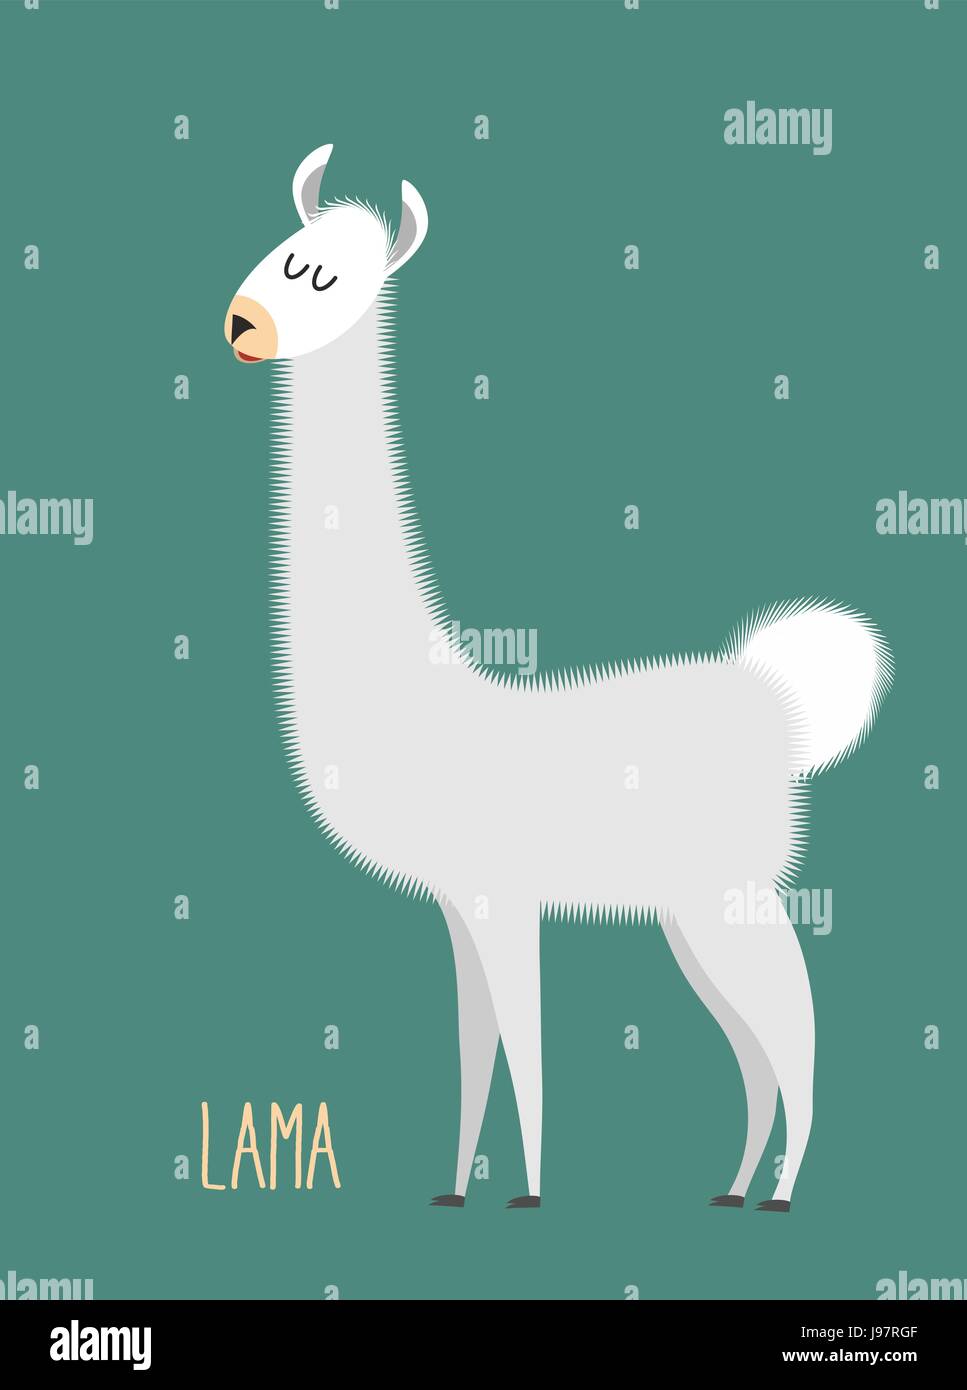 Llama Alpaca. Lama animal sur un fond vert. Vector illustration Illustration de Vecteur